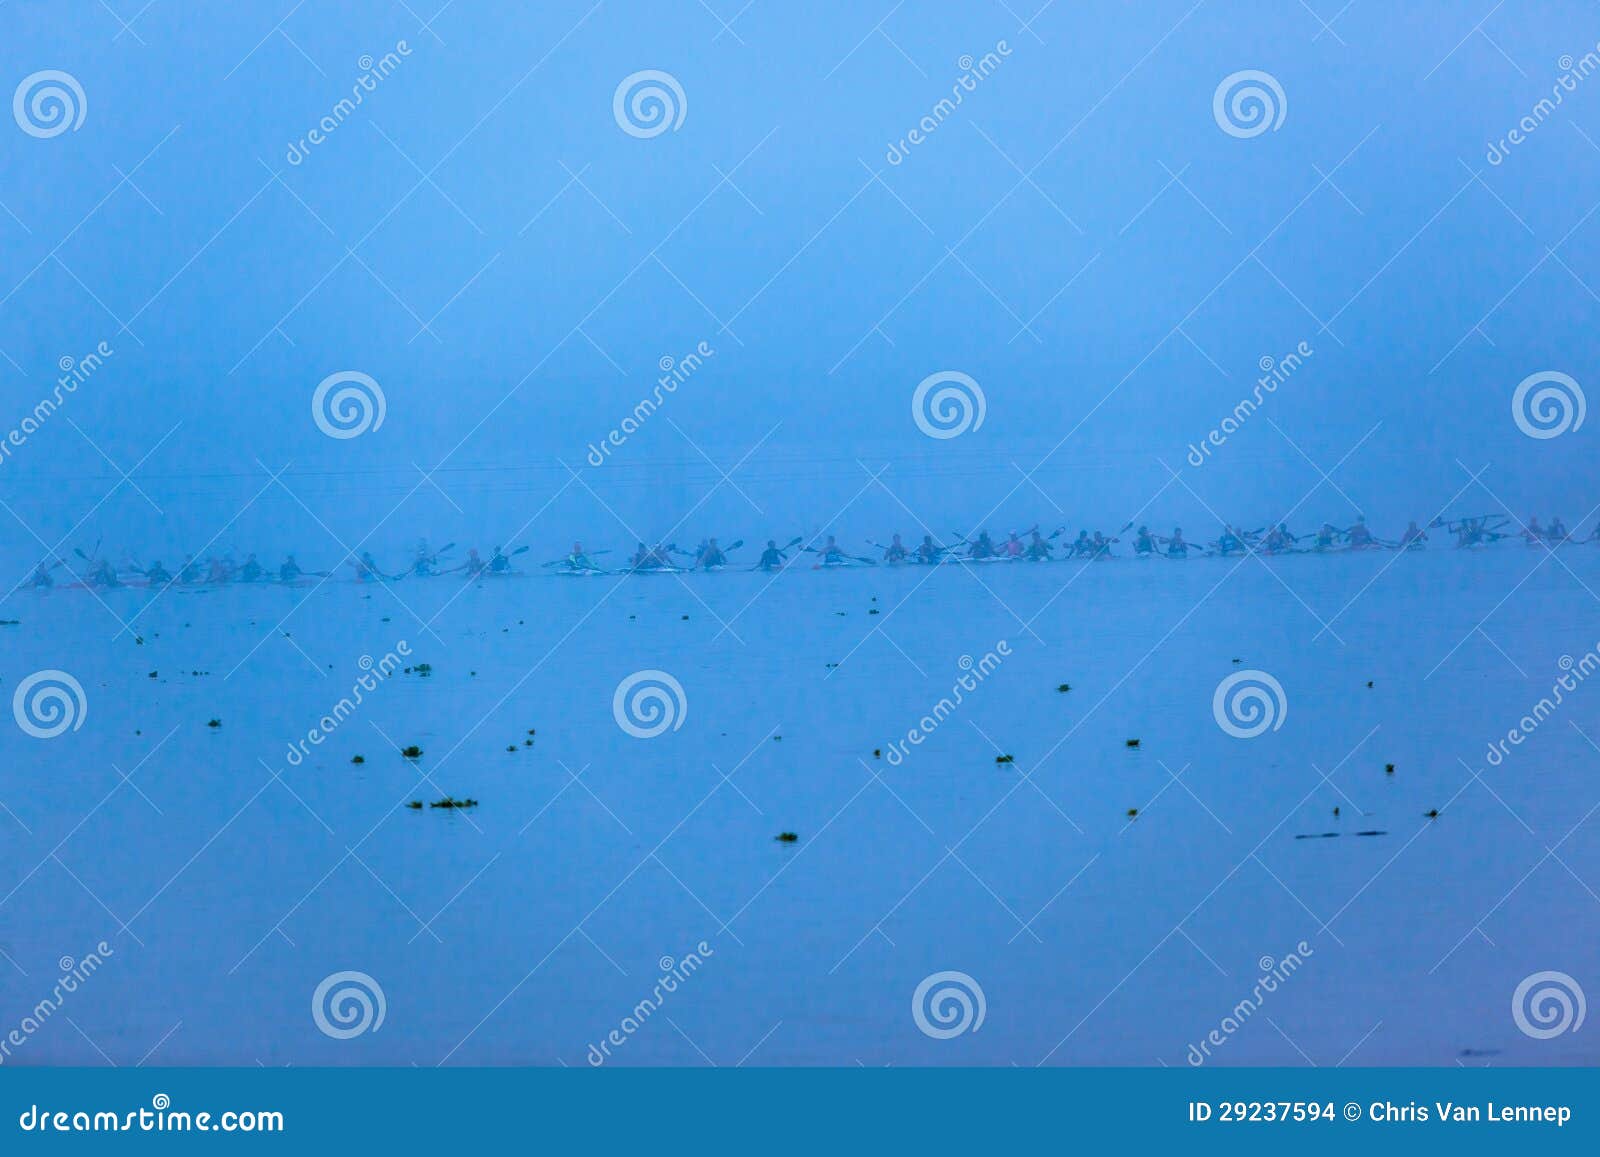 Canoe Race Start Mist Editorial Stock Image - Image: 29237594